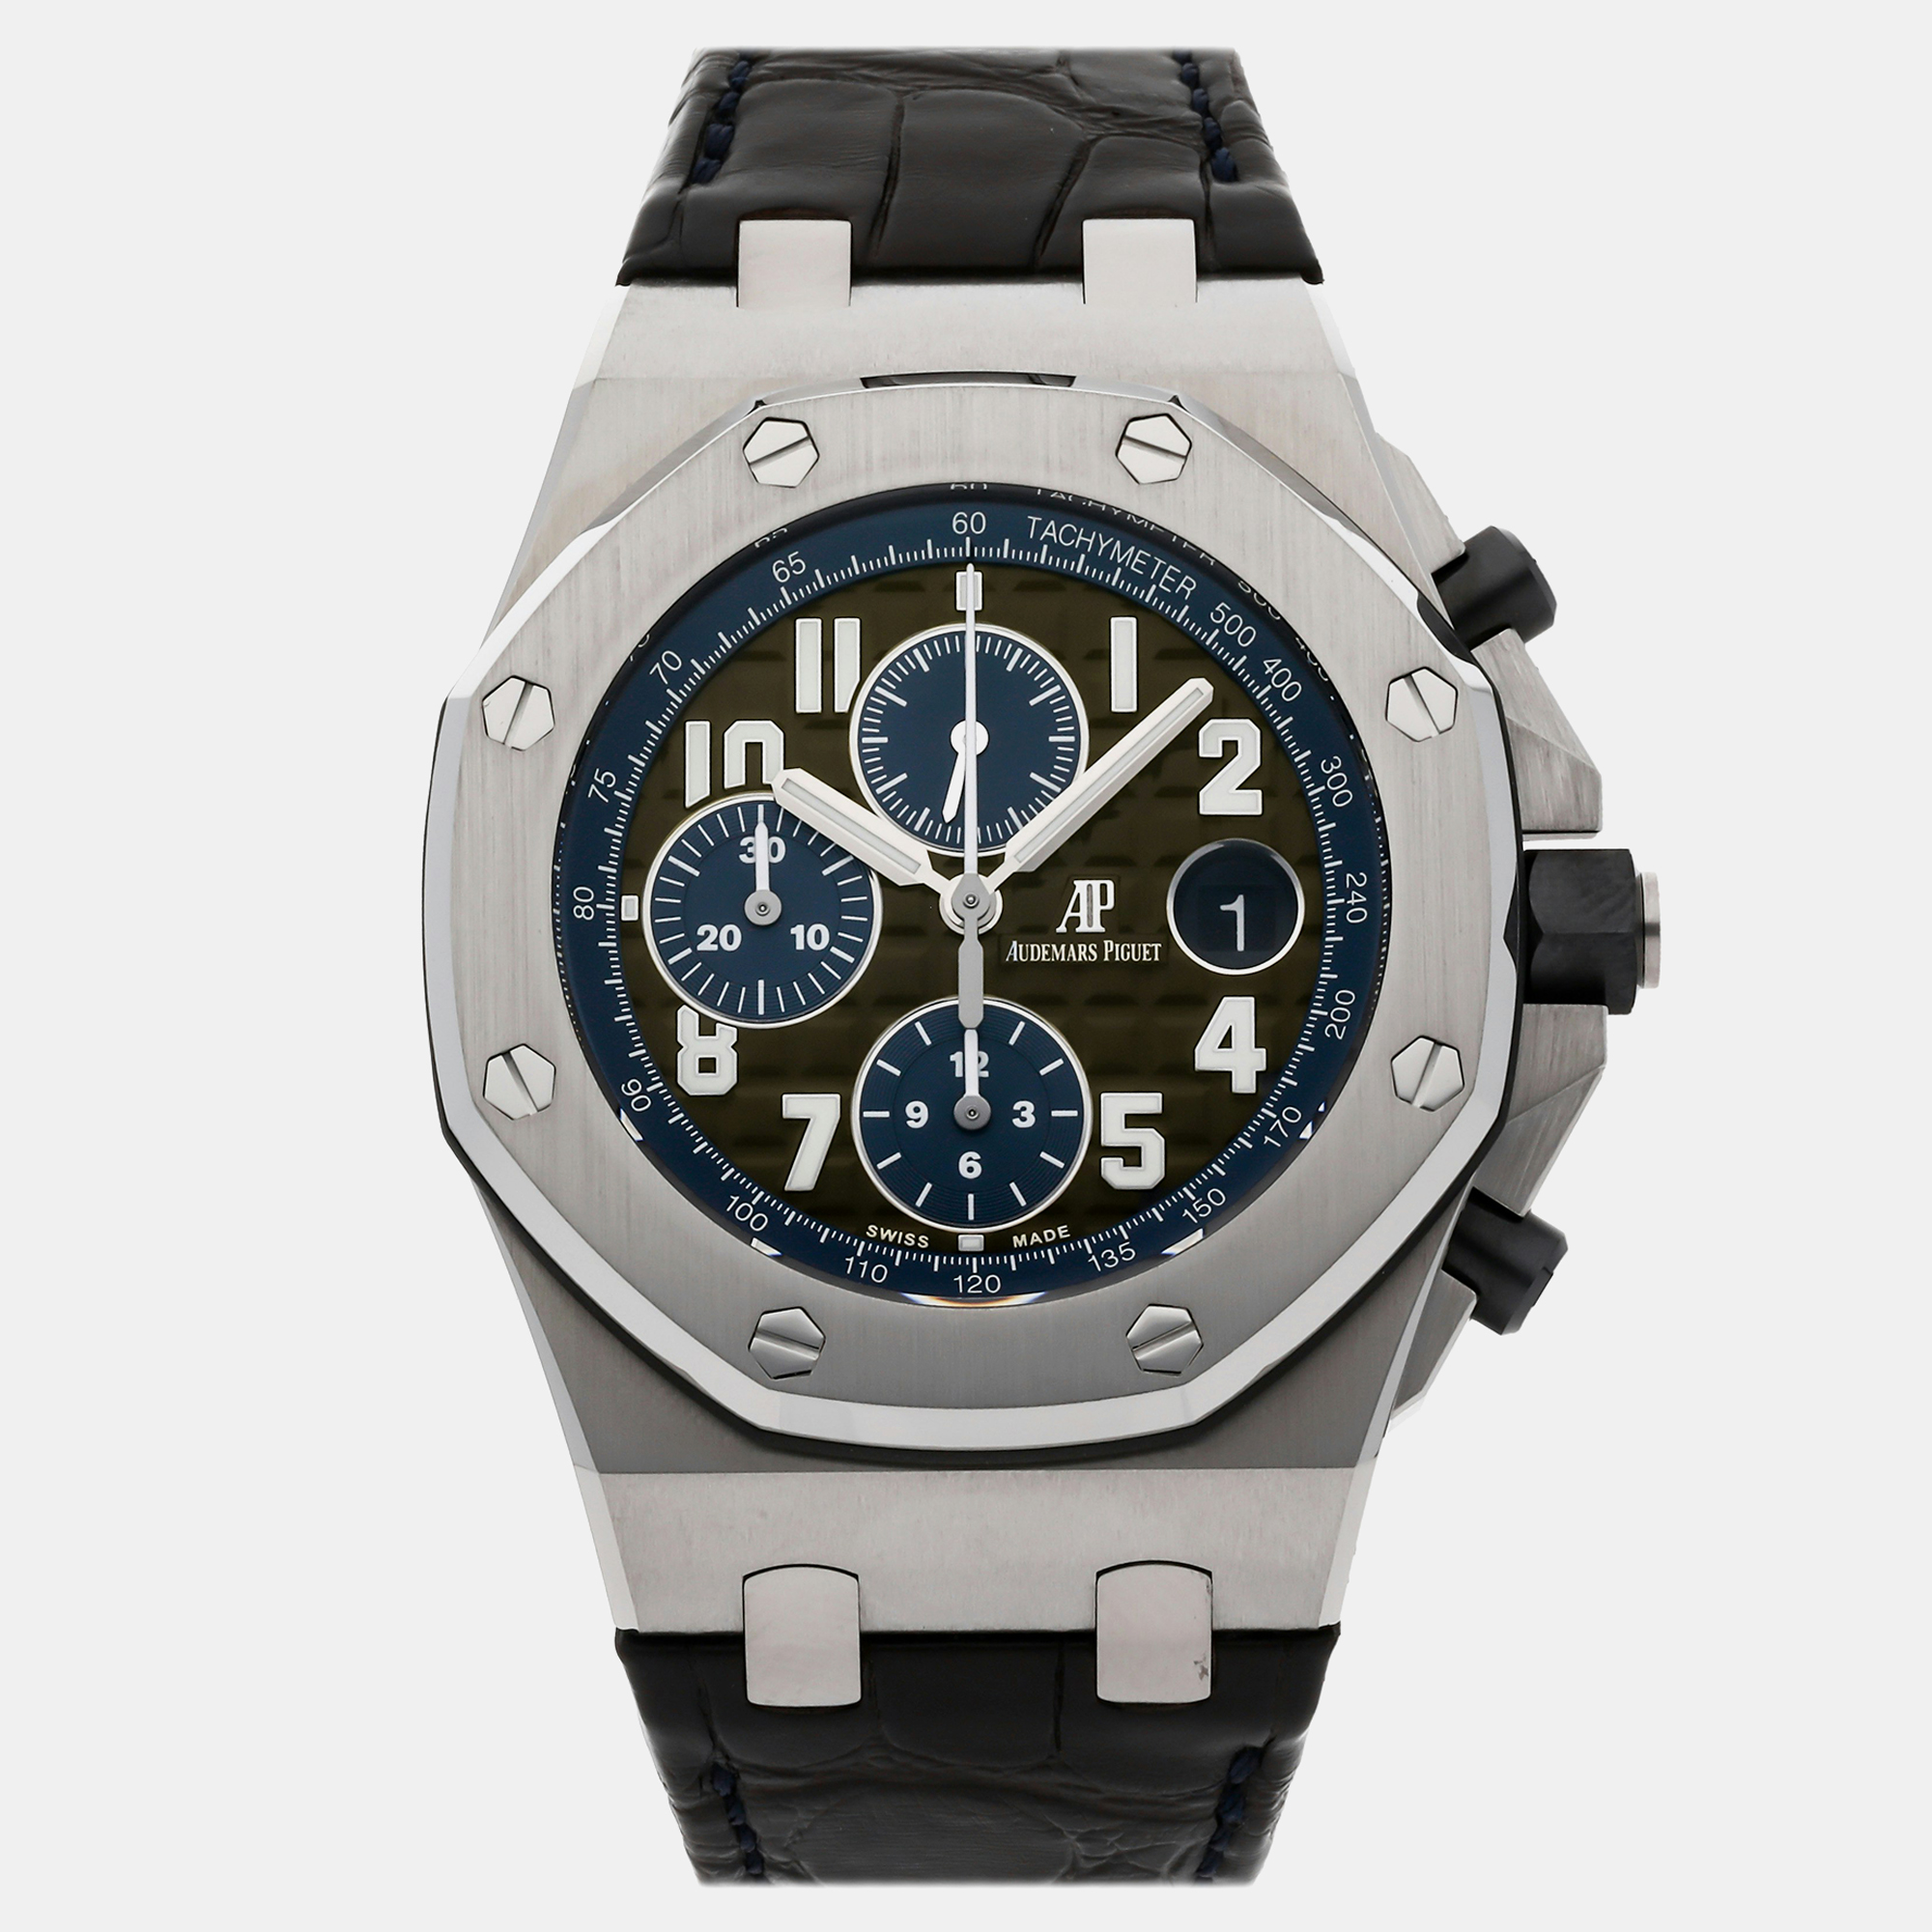 Audemars piguet brown stainless steel royal oak offshore 26470st.oo.a099cr.01 automatic men's wristwatch 42 mm